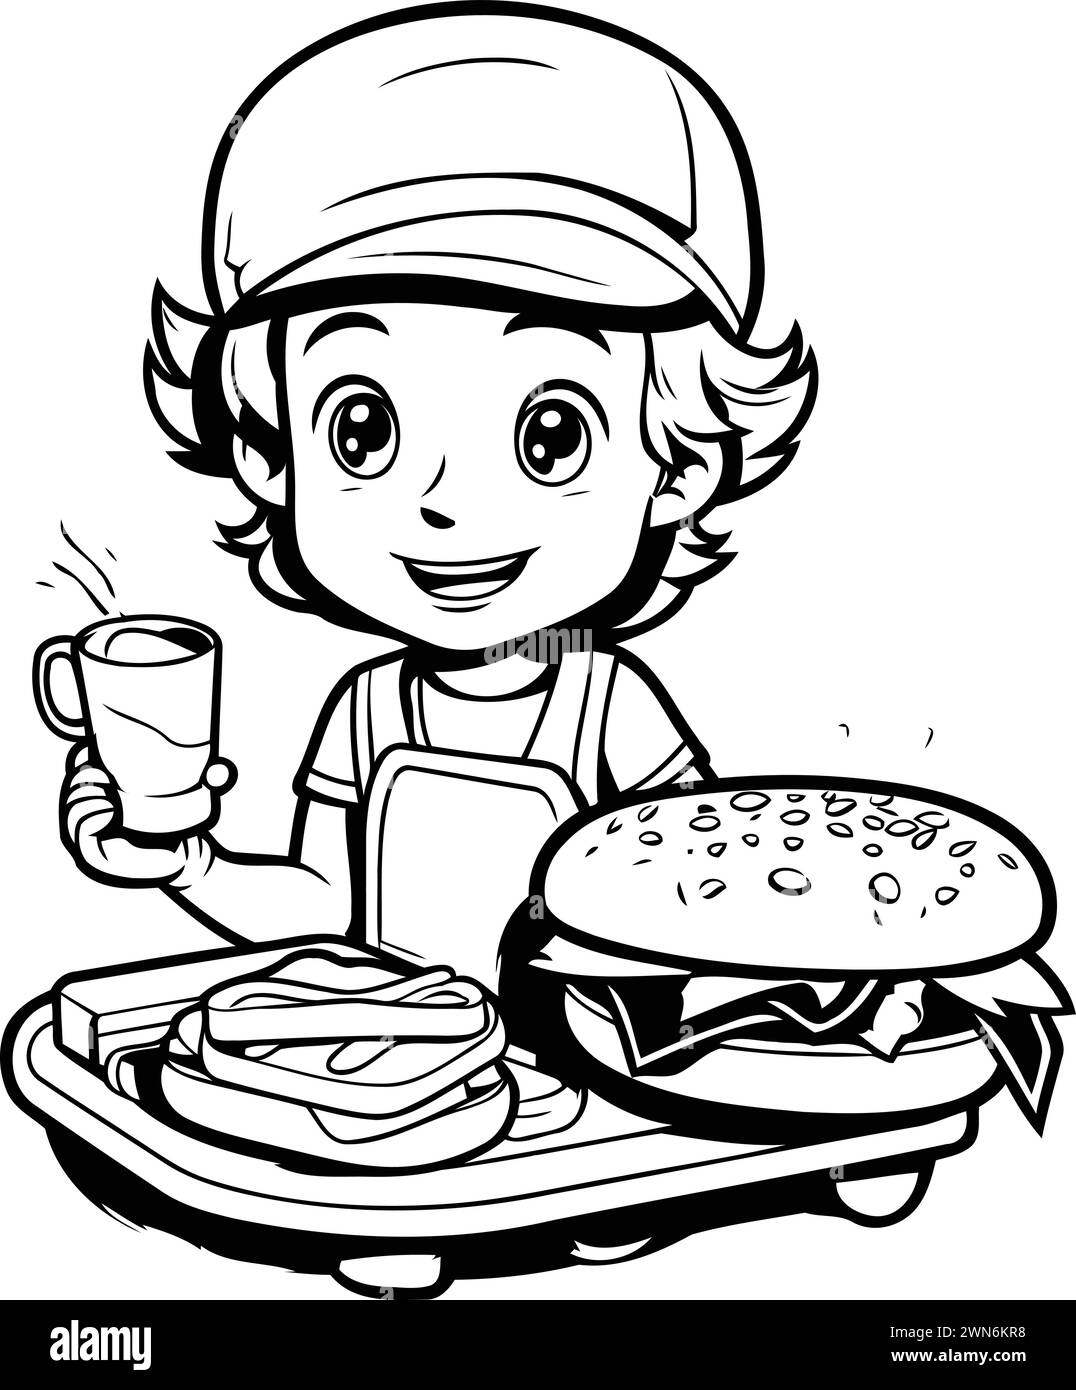 Cartoon Illustration of Kid Boy Eating Fast Food or Hamburger for Coloring Book Stock Vector